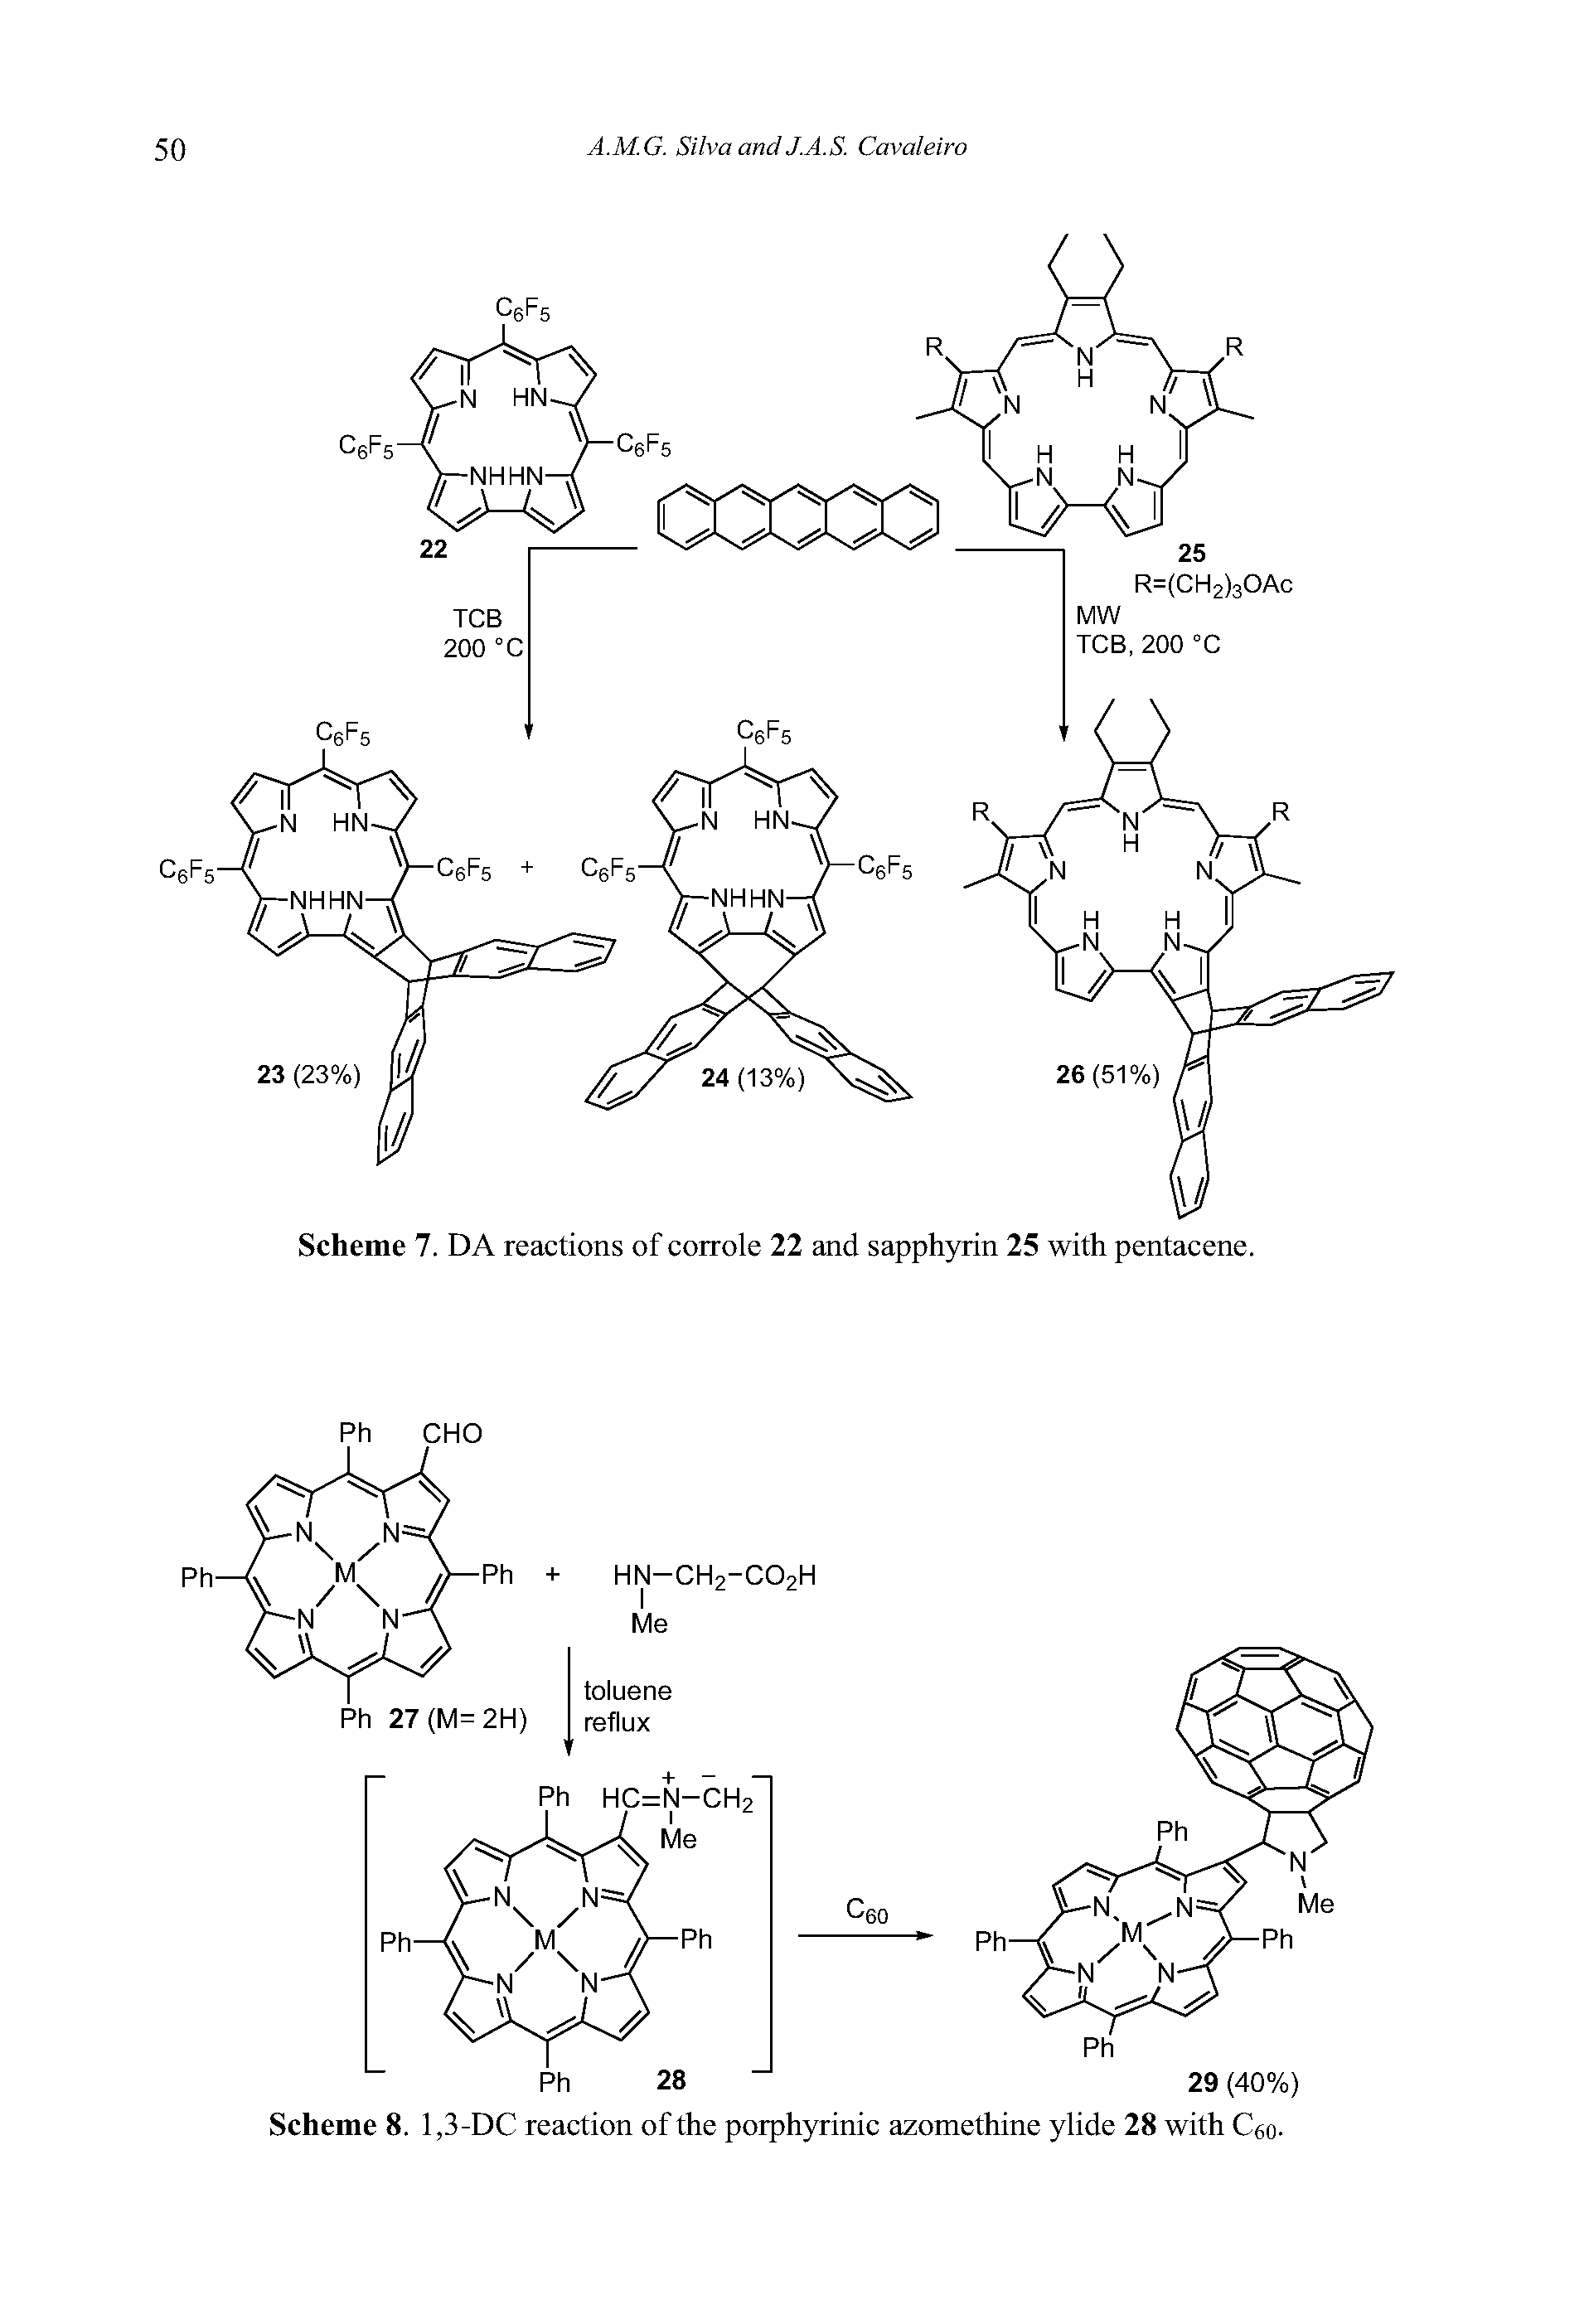 Scheme 7. DA reactions of corrole 22 and sapphyrin 25 with pentacene.